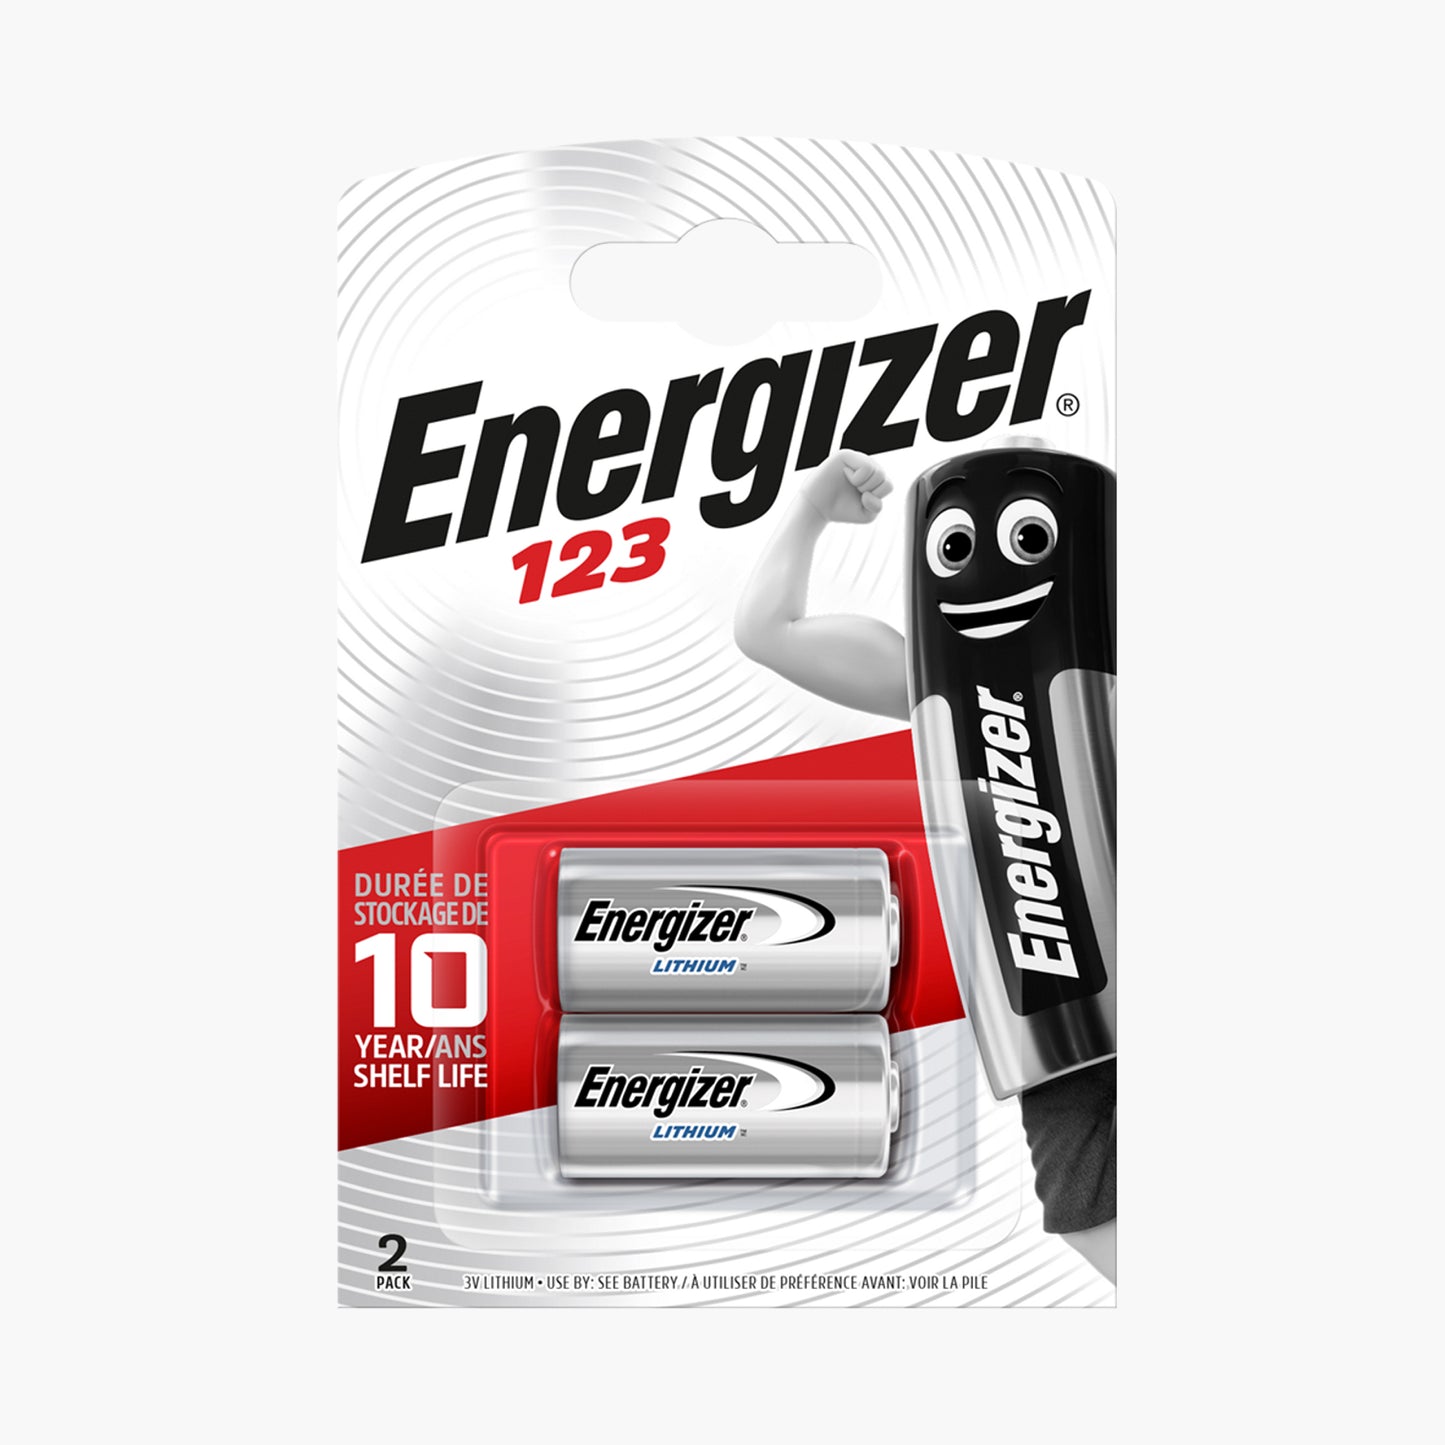 Energizer 123 Batterie